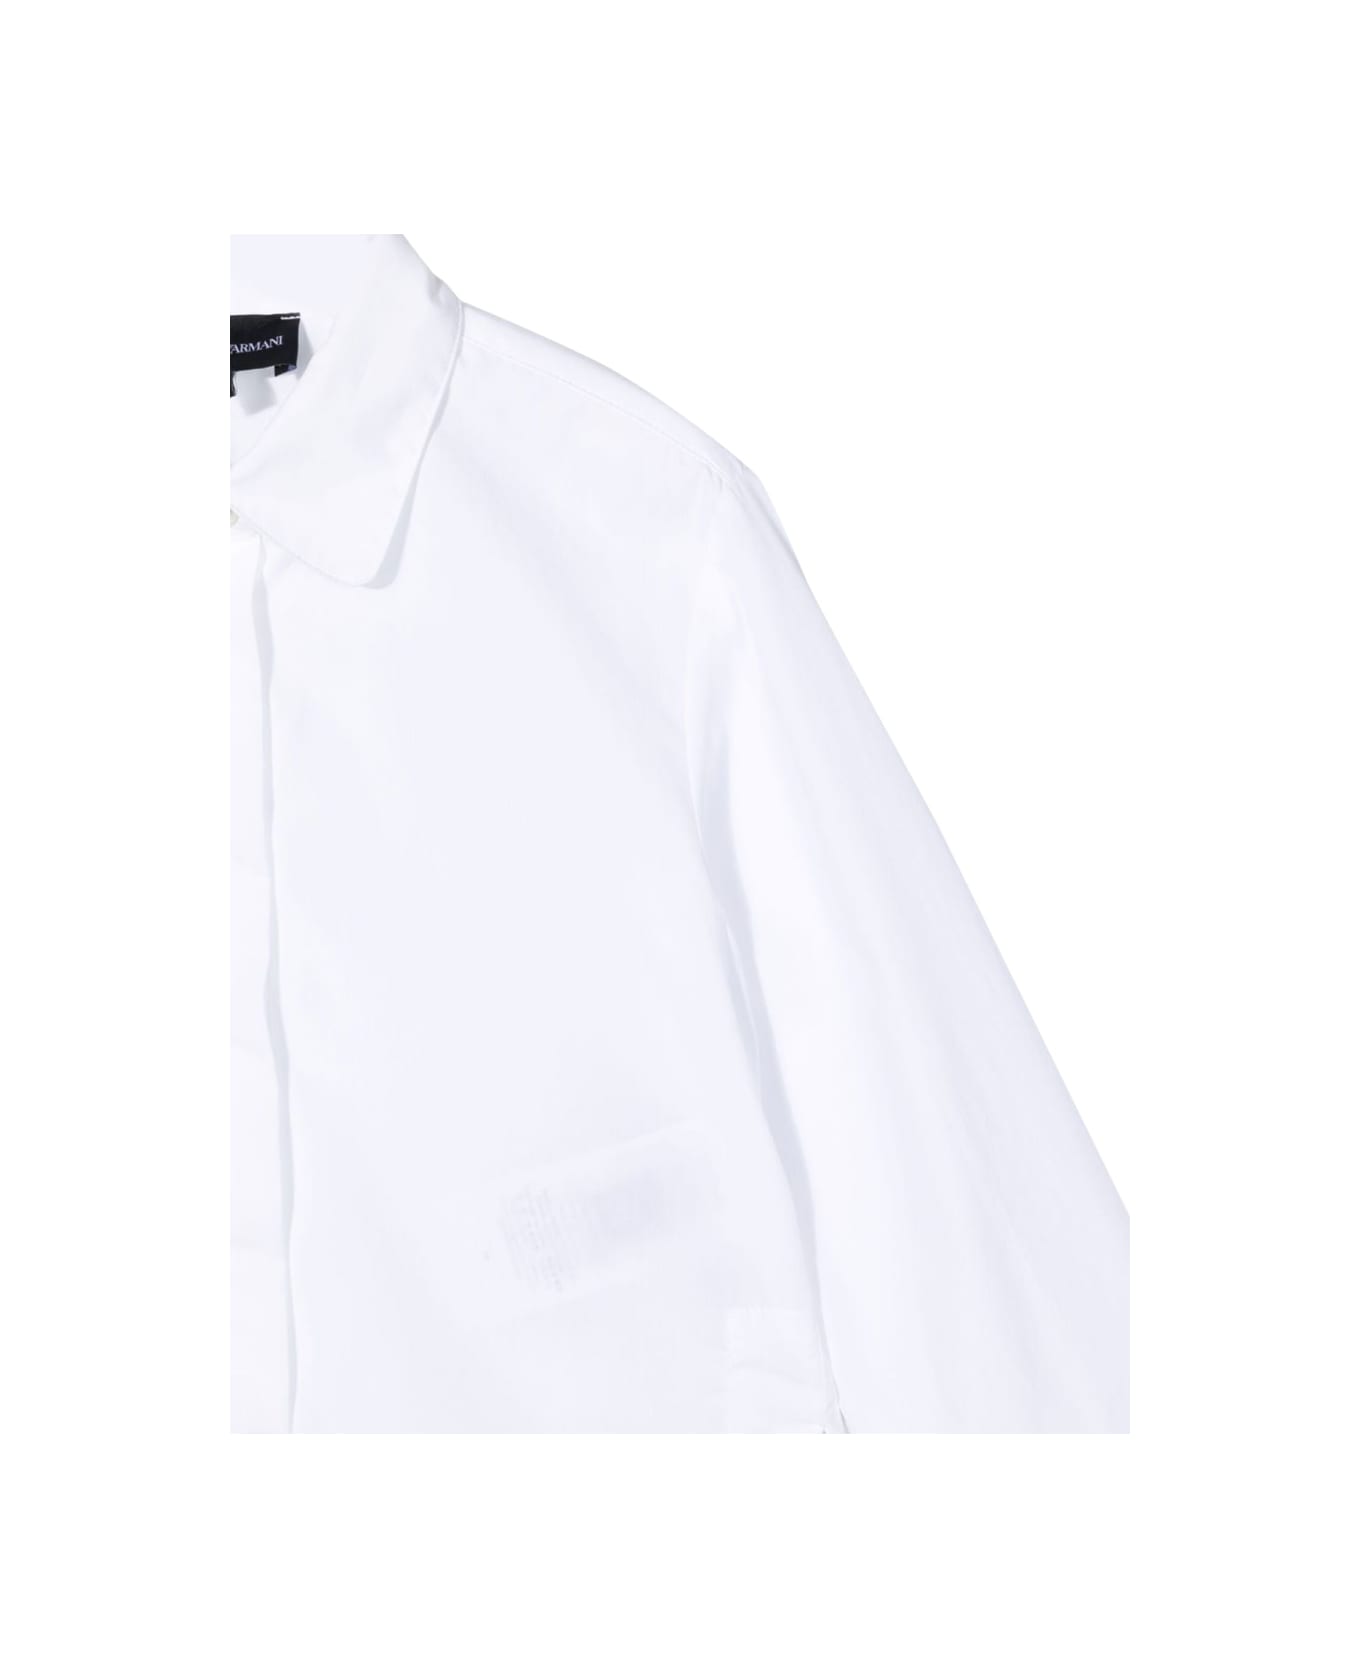 Emporio Armani Shirt M/l - WHITE シャツ